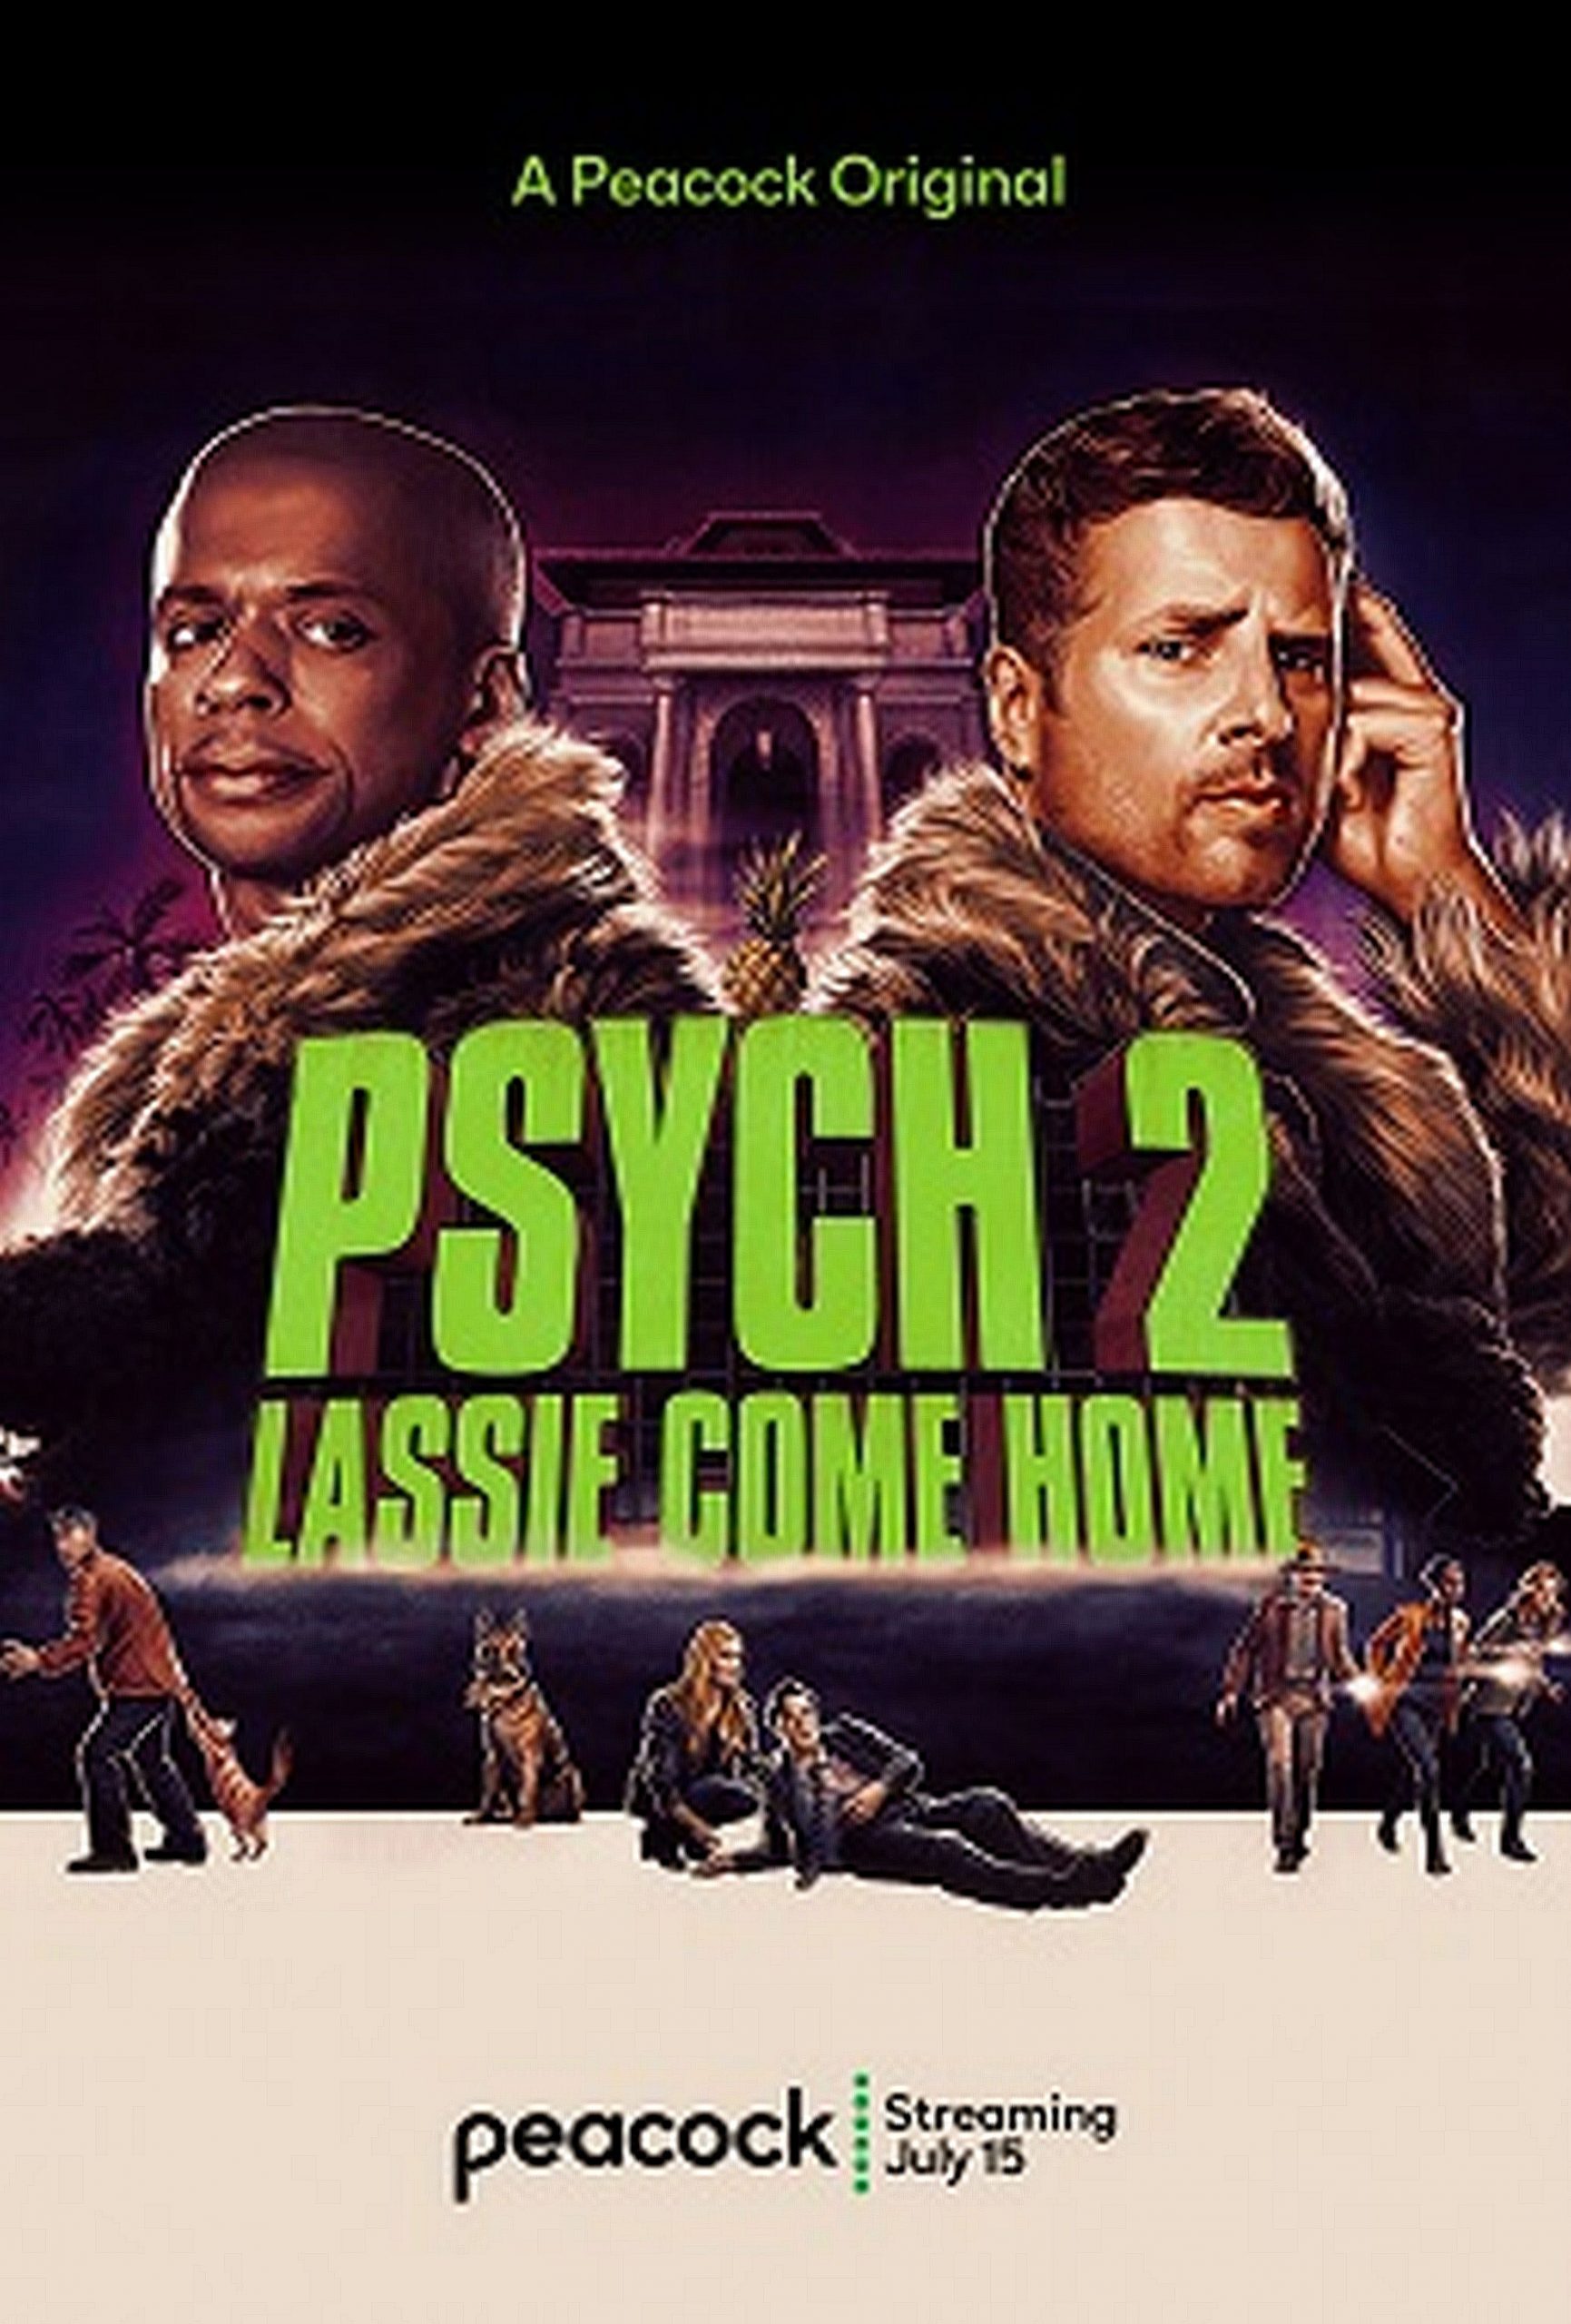 Psych 2: Lassie Come Home (2020) ไซก์ แก๊งสืบจิตป่วน 2 พาลูกพี่กลับบ้าน